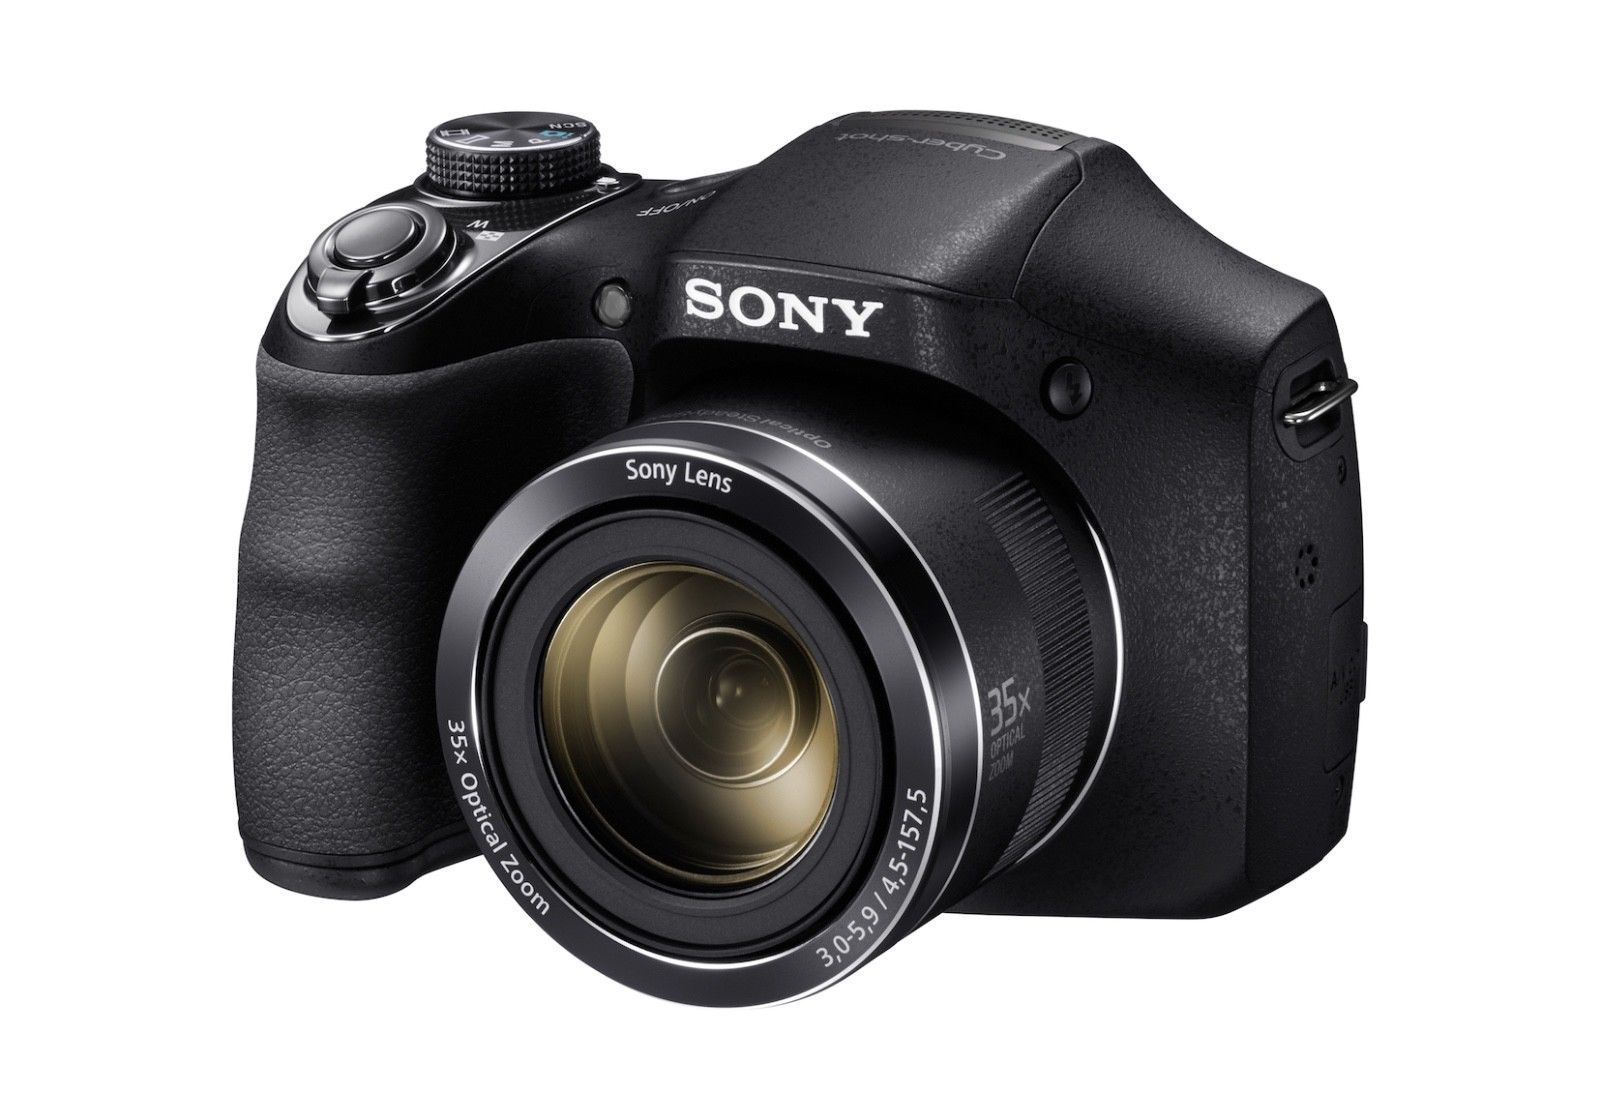 Sony Cyber-shot DSC-H300 20.1 MP Digitalkamera - B-Ware - TOP Qualität! Wie neu